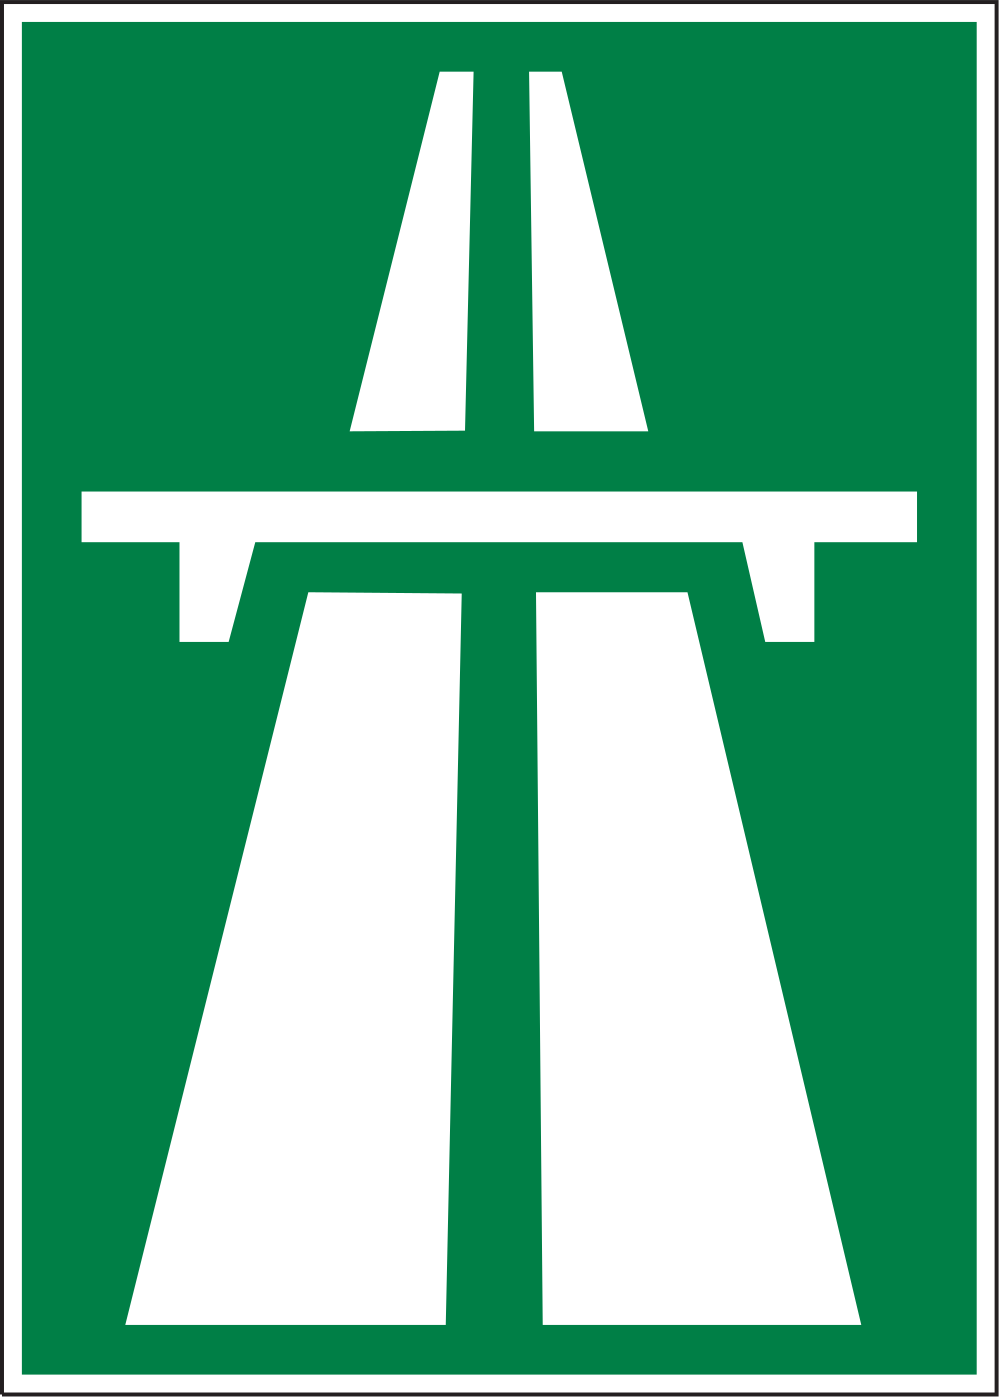 Autobahn Logo PNG-PlusPNG.com